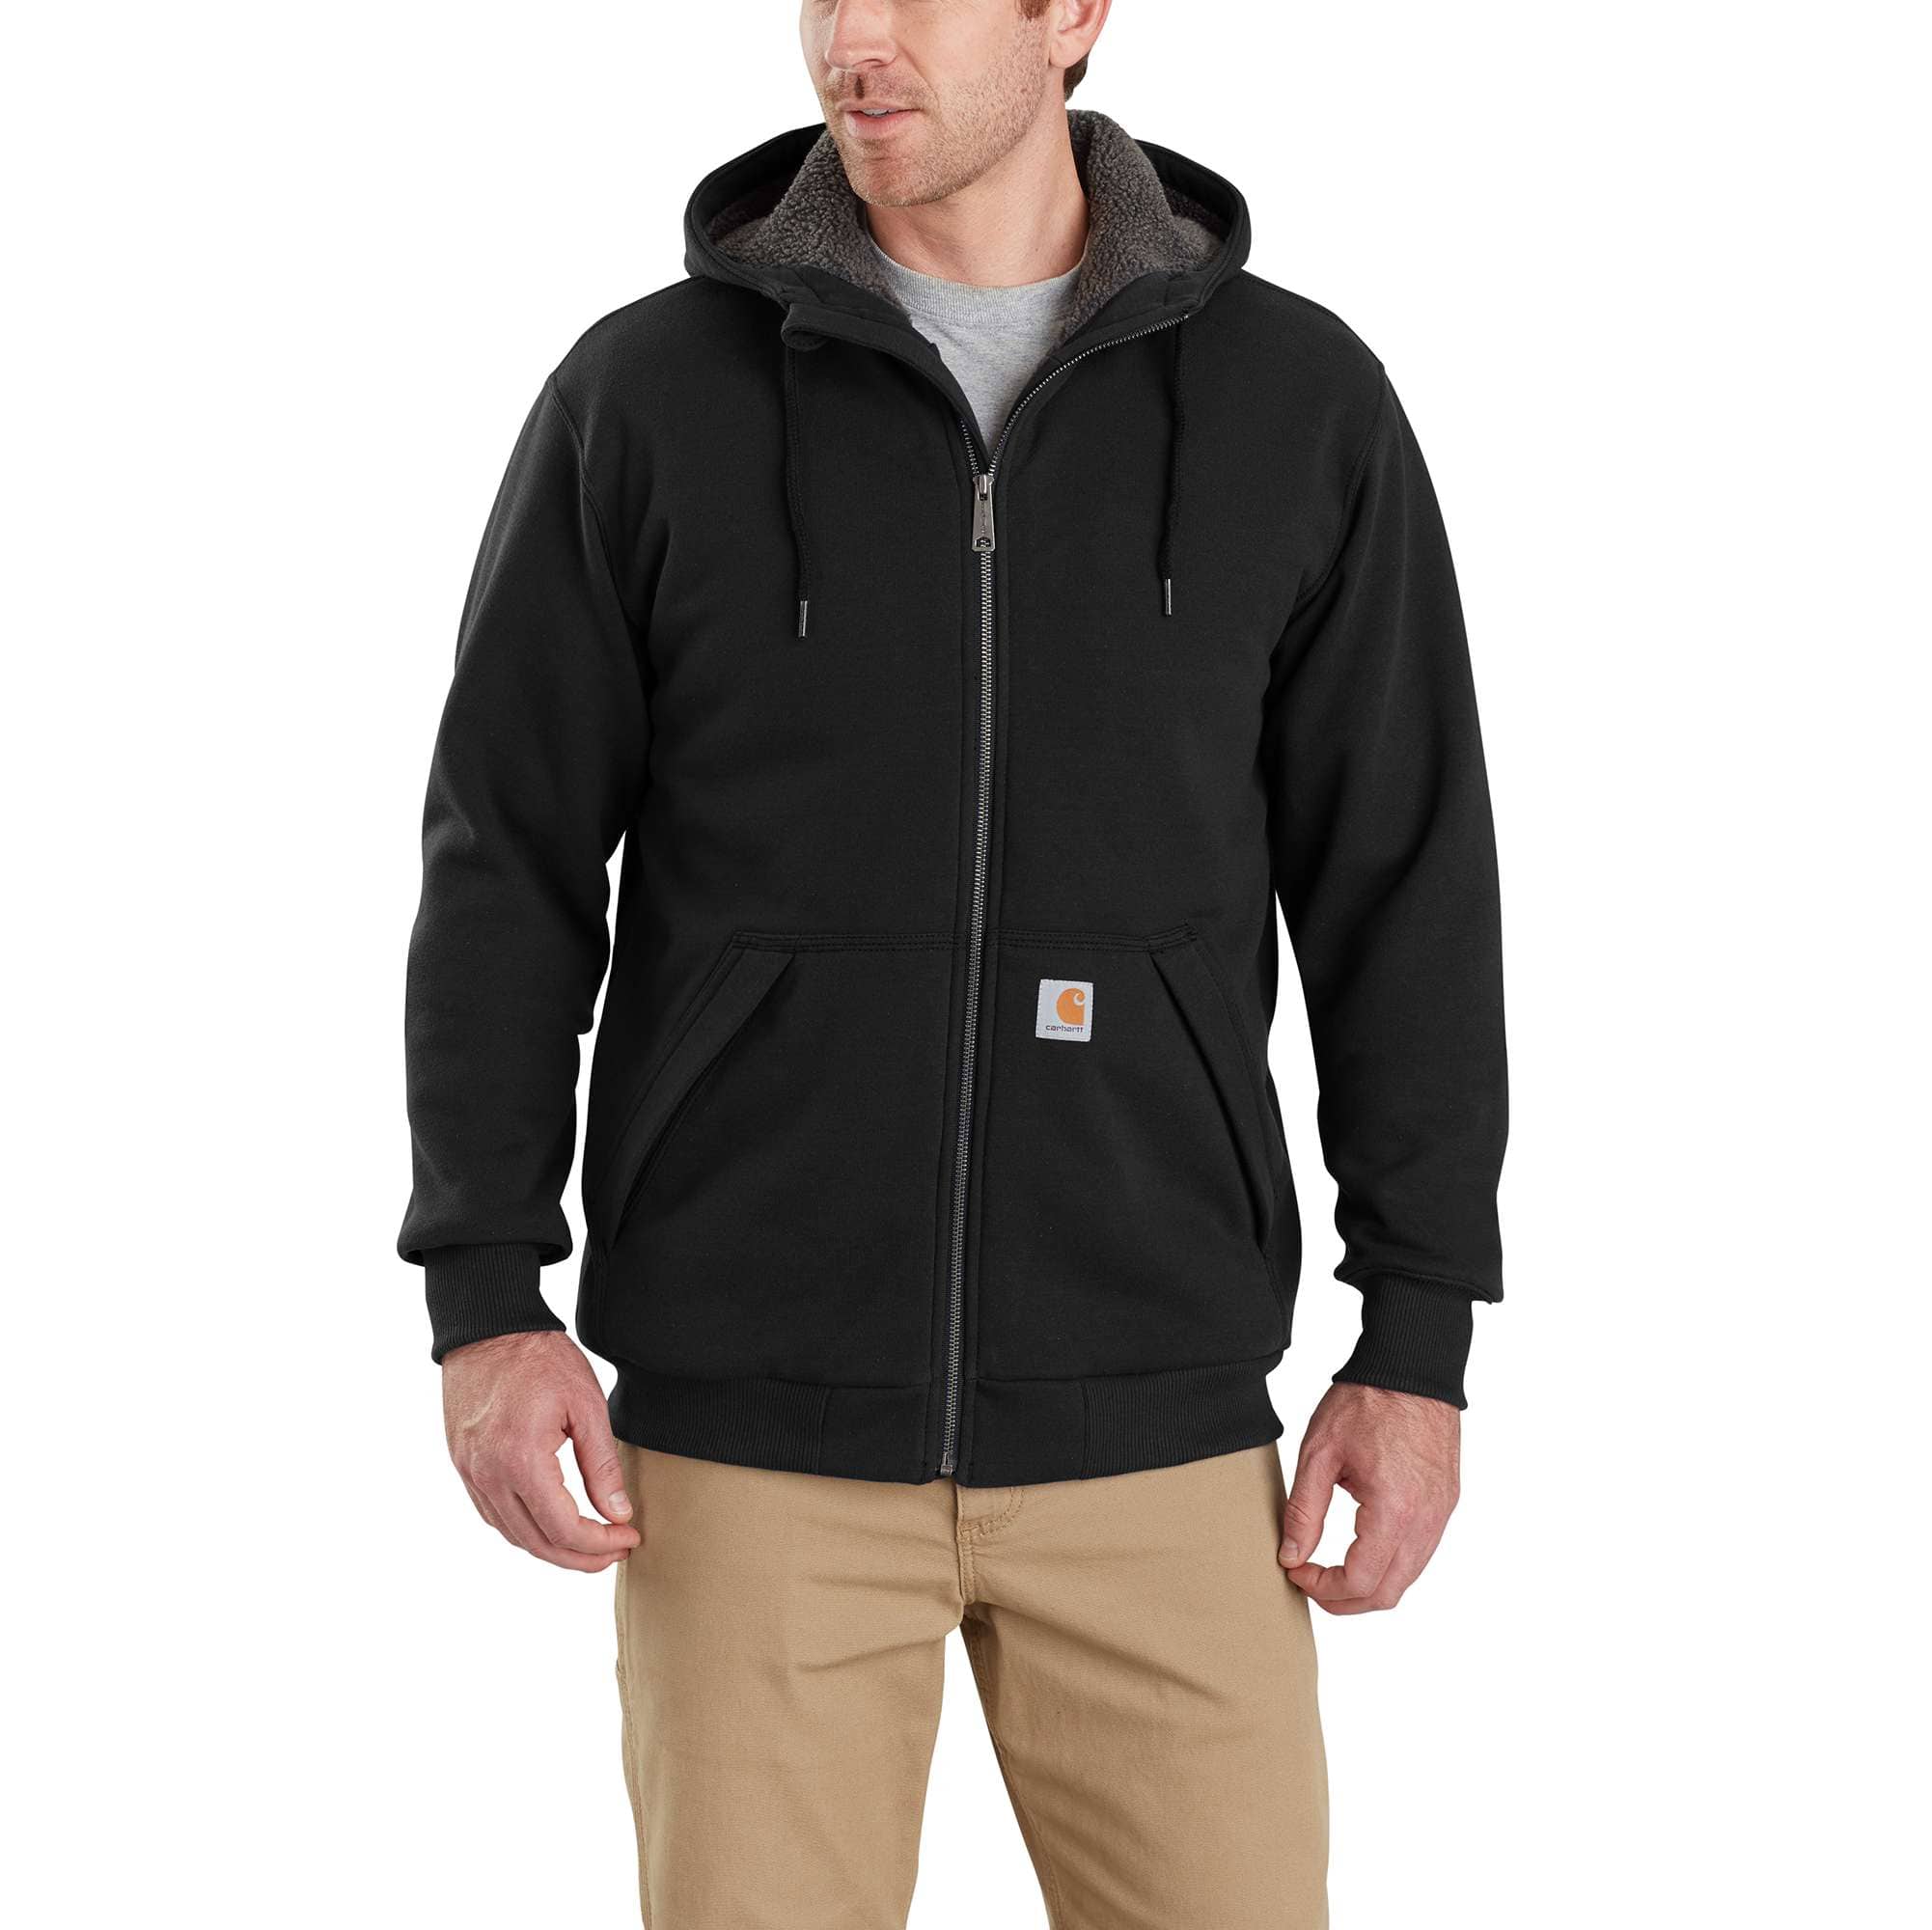 Men's Premium Athletic Soft Sherpa Lined Fleece Zip Up Hoodie Sweater Jacket  (Black,S) 